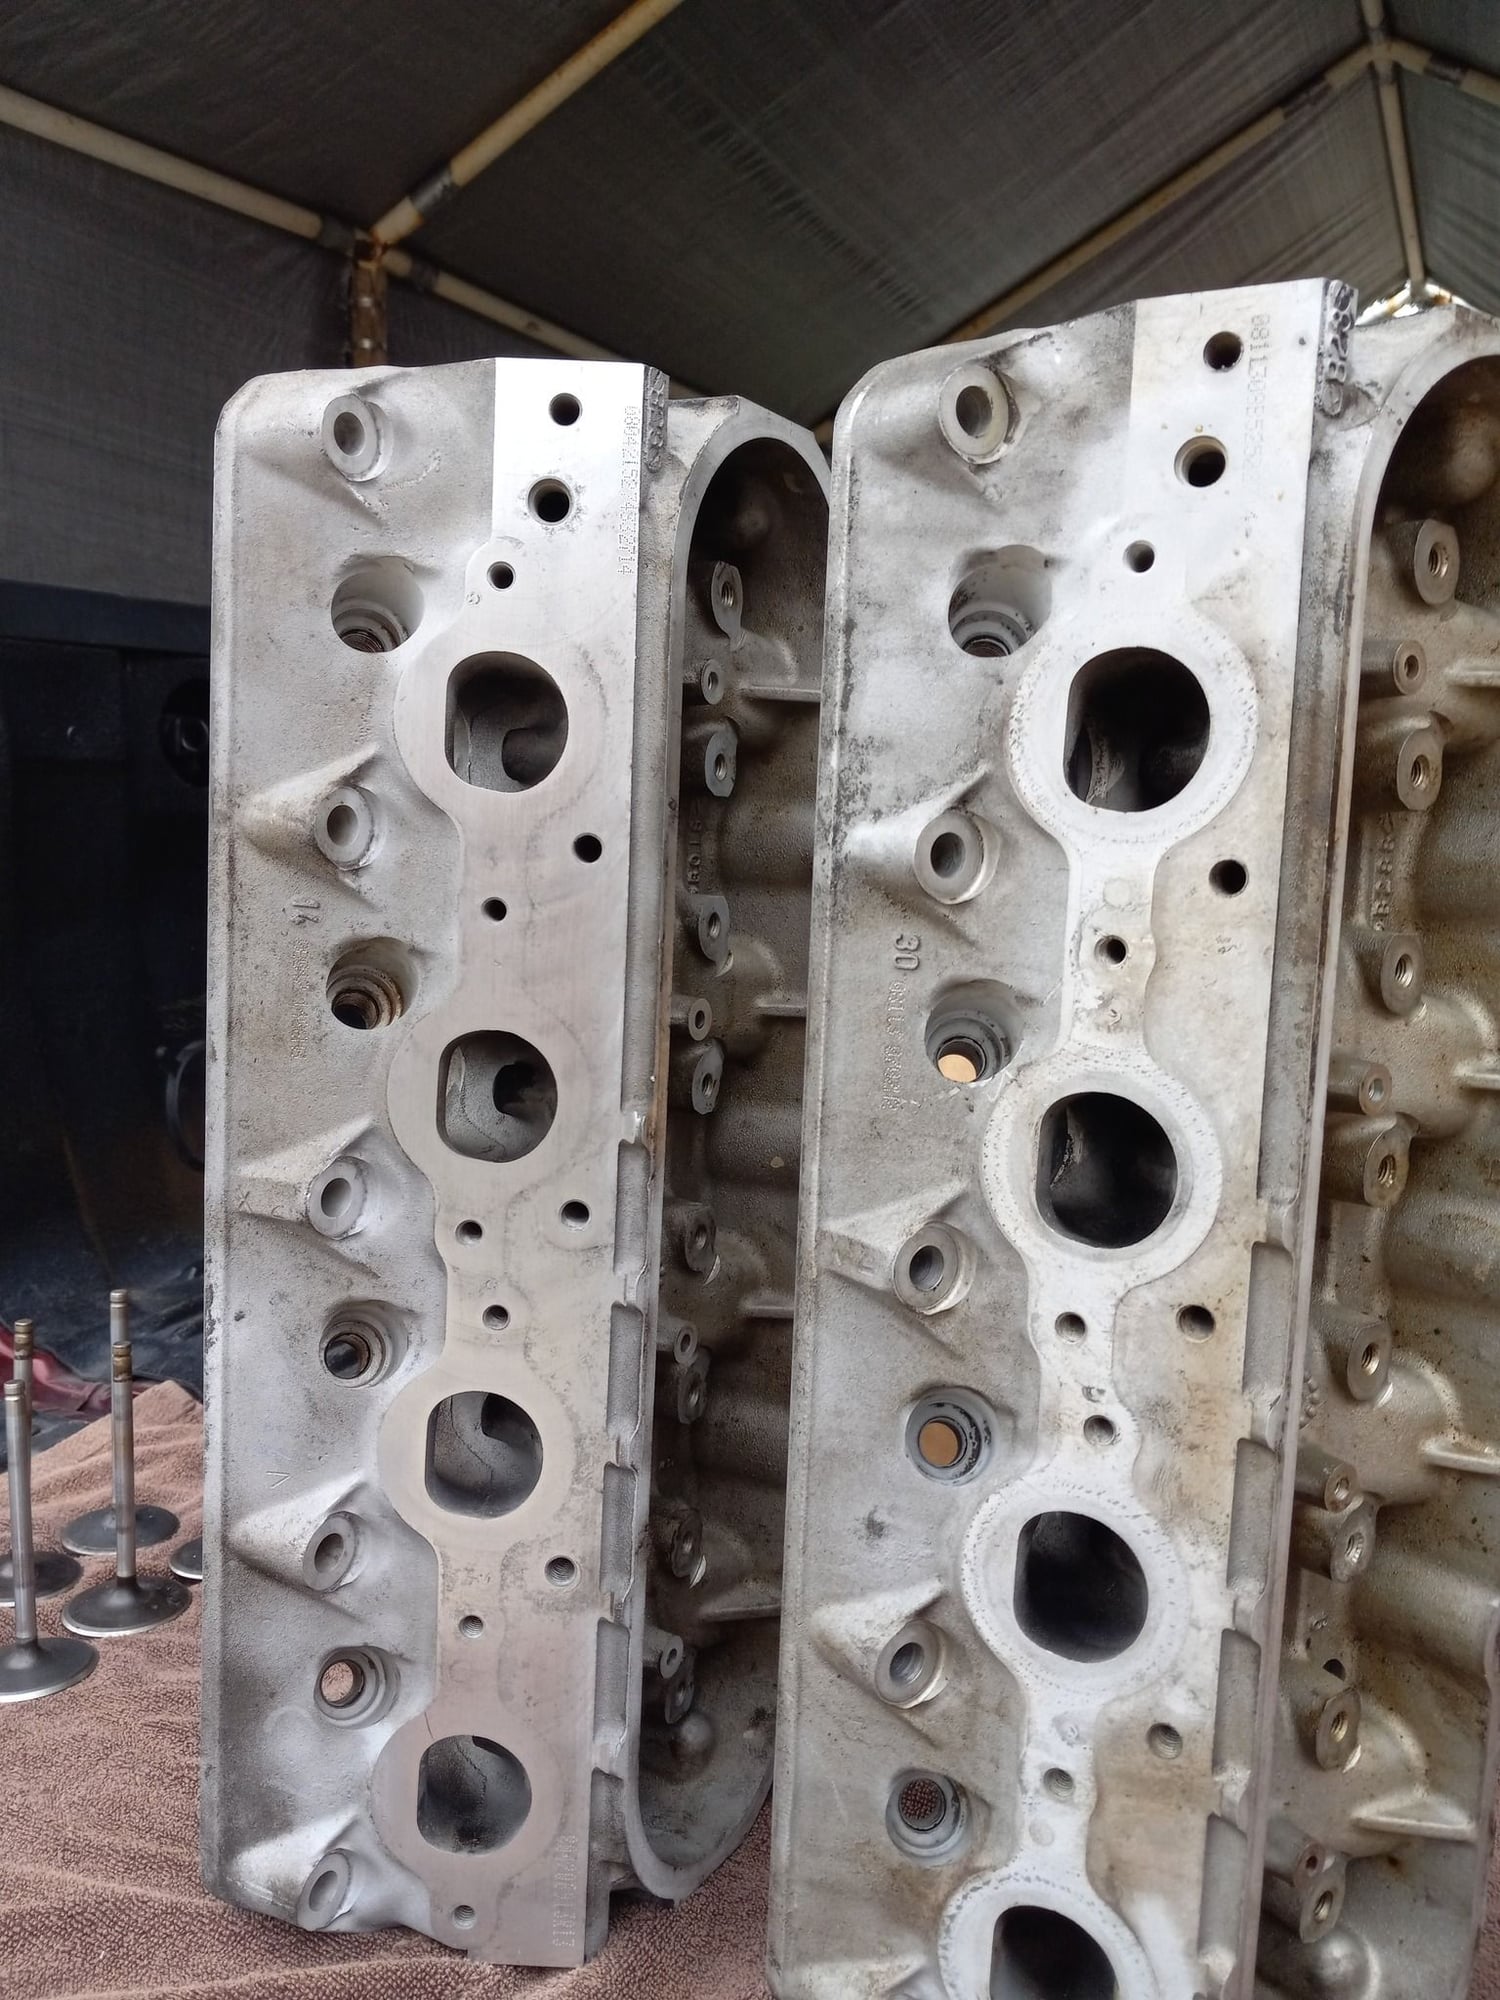 Engine - Intake/Fuel - 823 L92 heads - Used - 0  All Models - Redford, MI 48240, United States